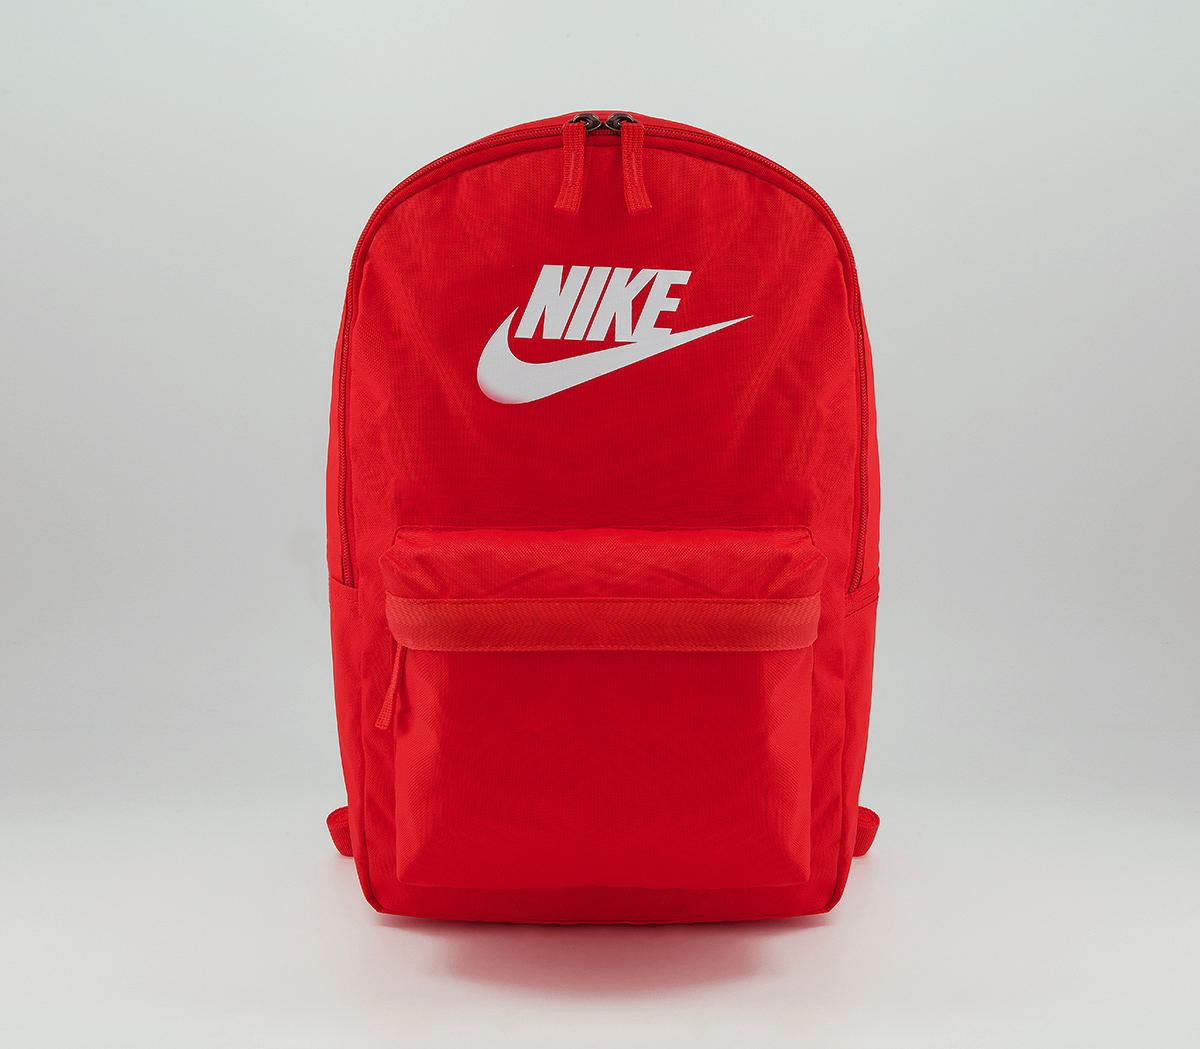 NikeHeritage BackpackChile Red White